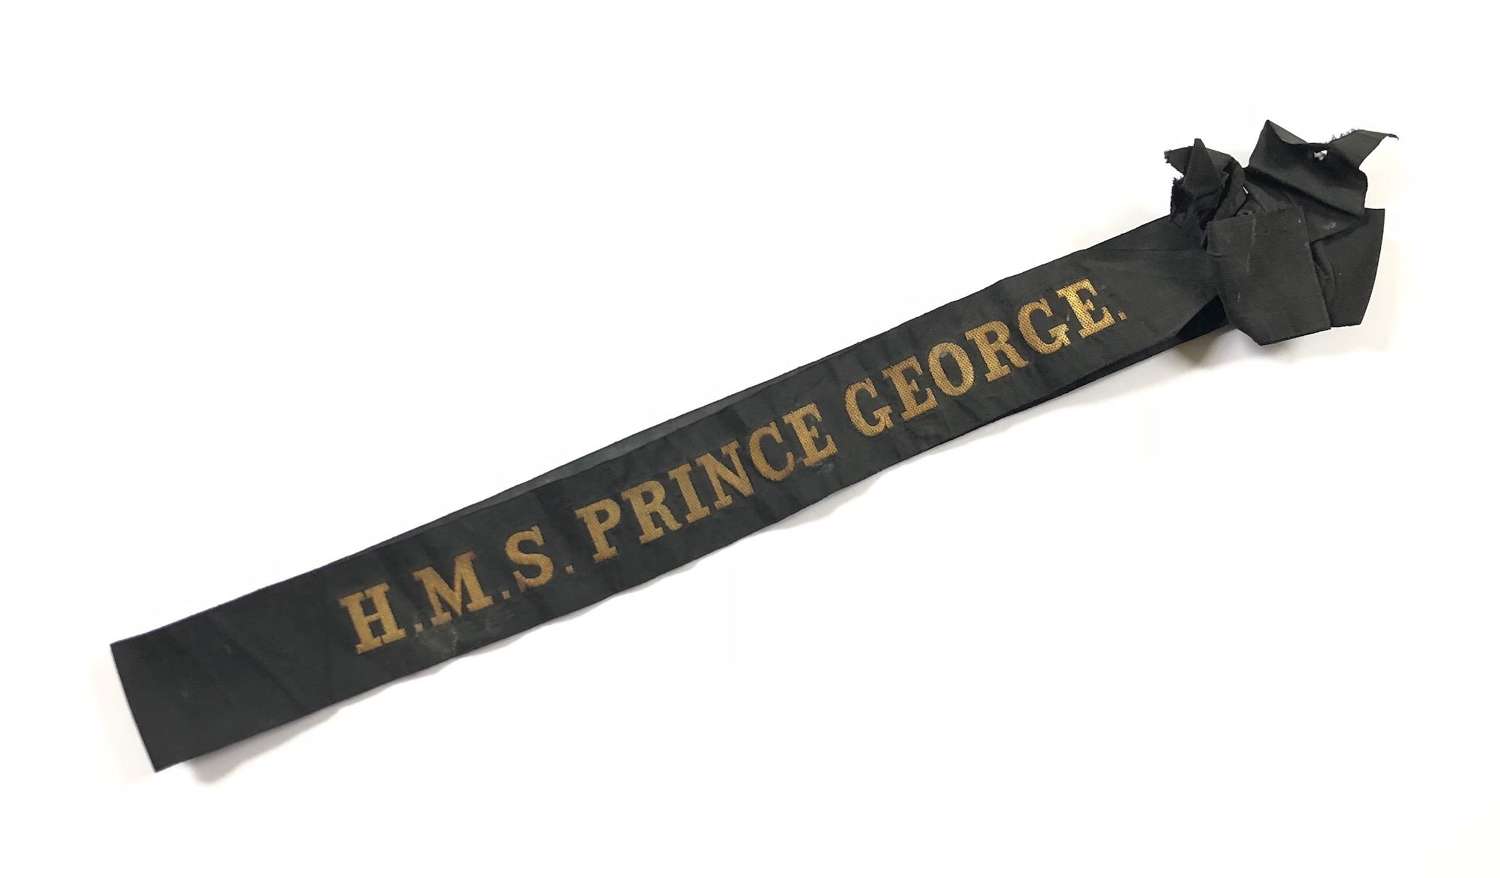 WW1 HMS Prince George Royal Navy Ratings Cap Tally.